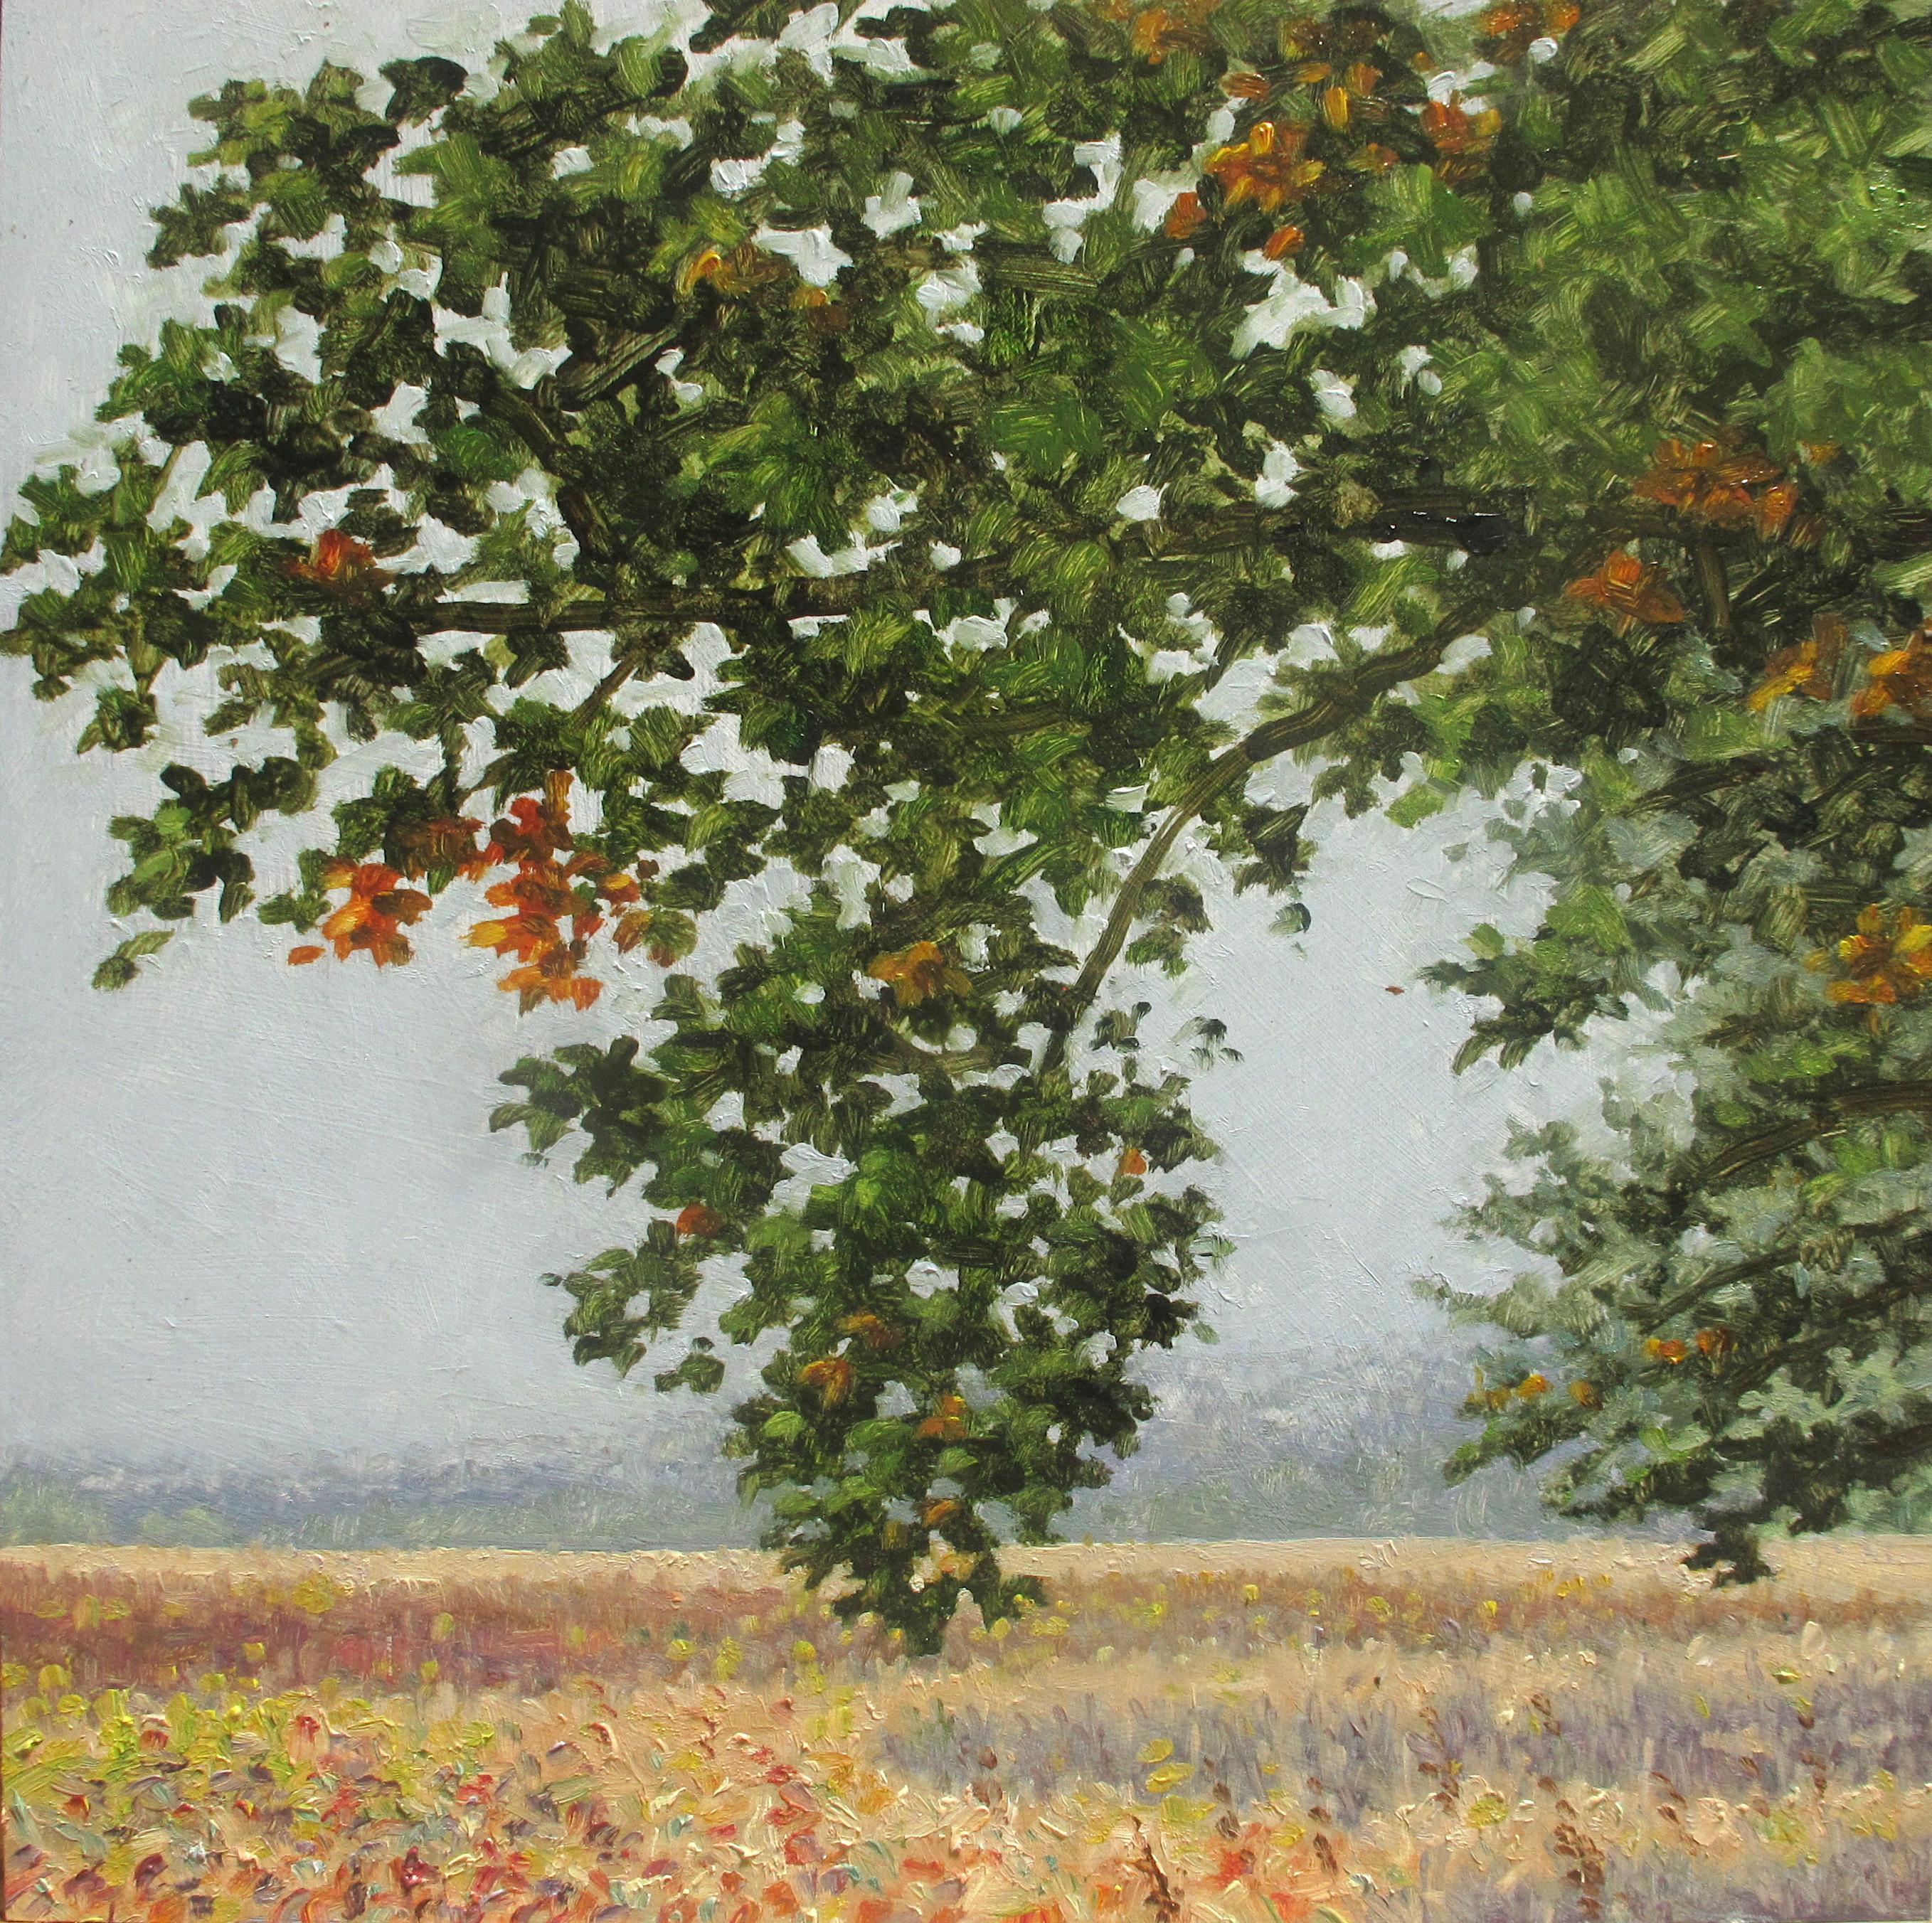 Thomas Sarrantonio Landscape Painting - Field Painting September 22 2020, Botanical, Green Tree, Golden Grass, Autumn